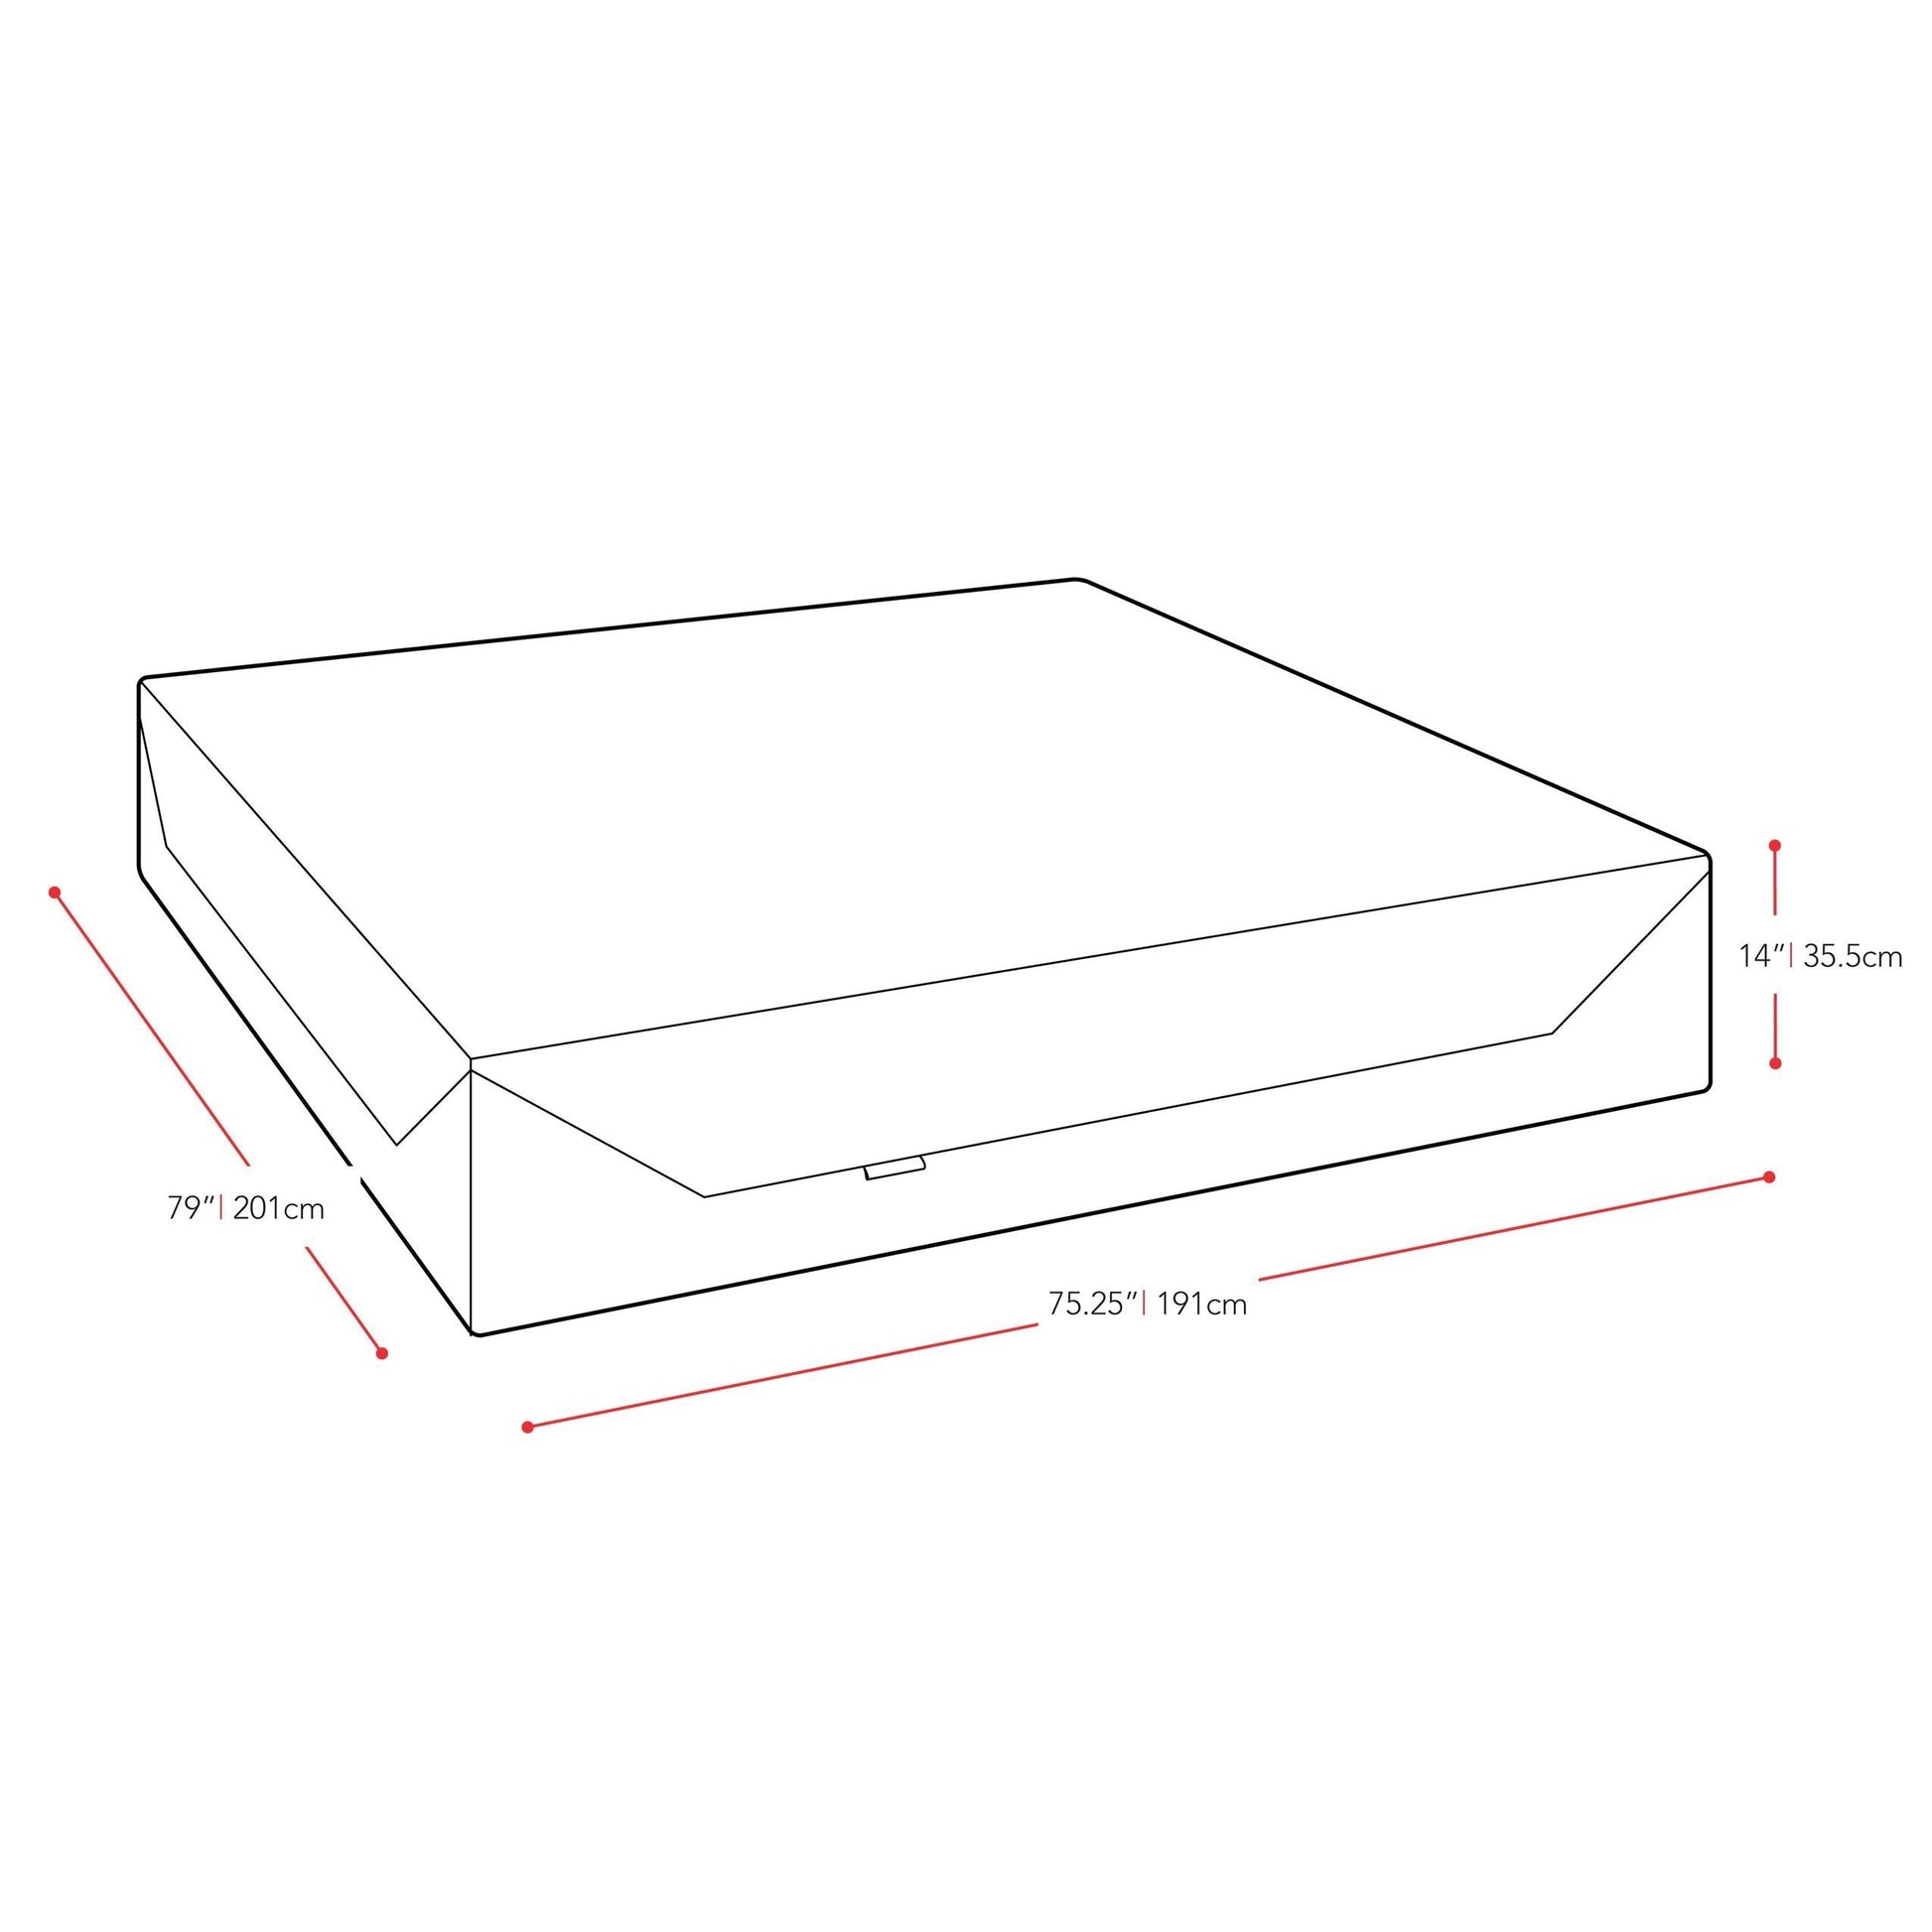 14 inch King Memory Foam Mattress measurements diagram by CorLiving